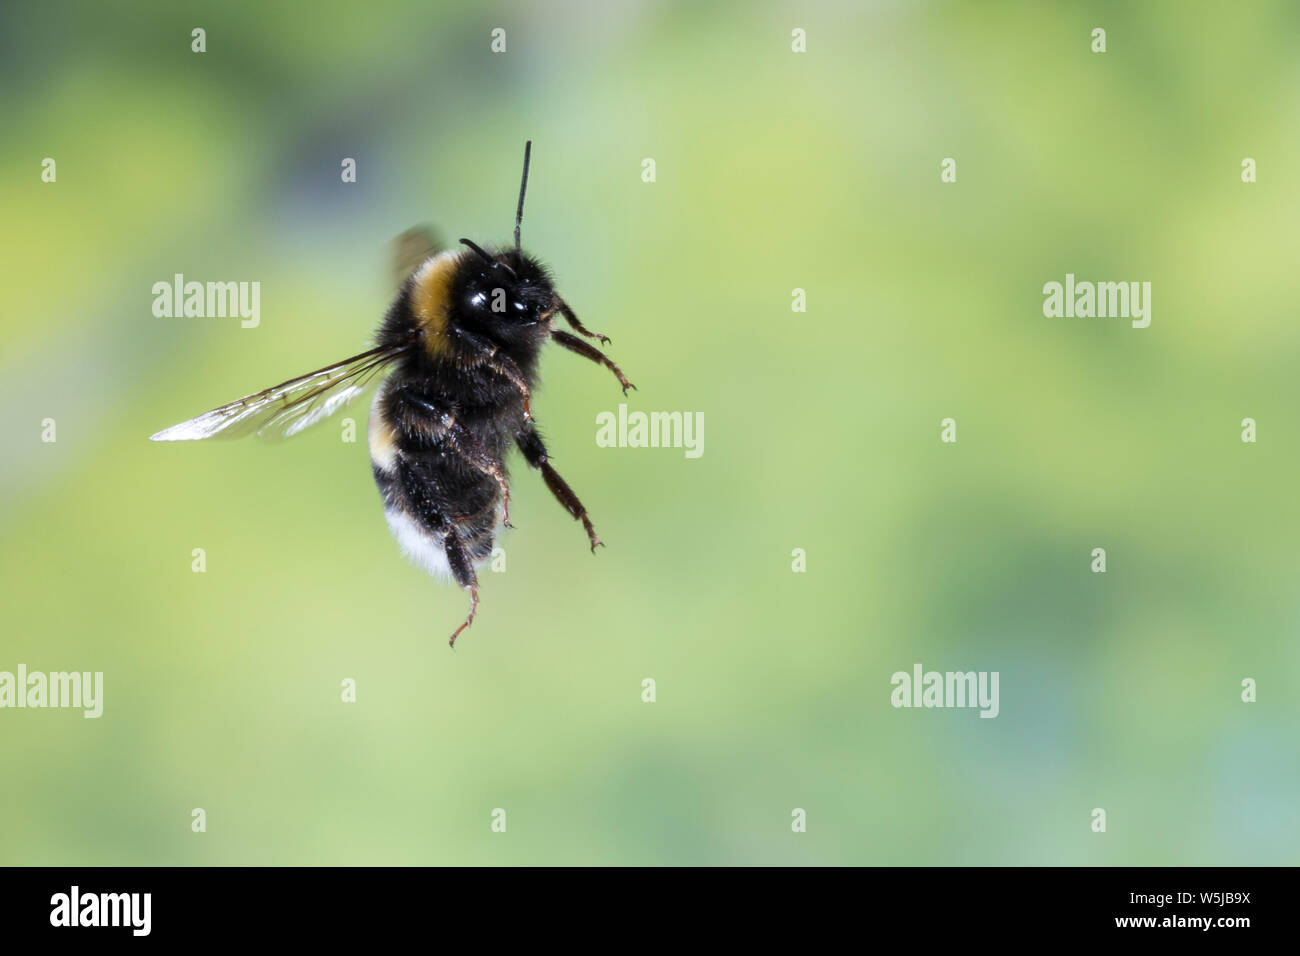 Erdhummel im Flug, fliegend, Insektenflug, Bombus spec., Bombus, Bombus terrestris-aggr., Bombus terrestris s. lat., bumble bee, flight, flying Stock Photo